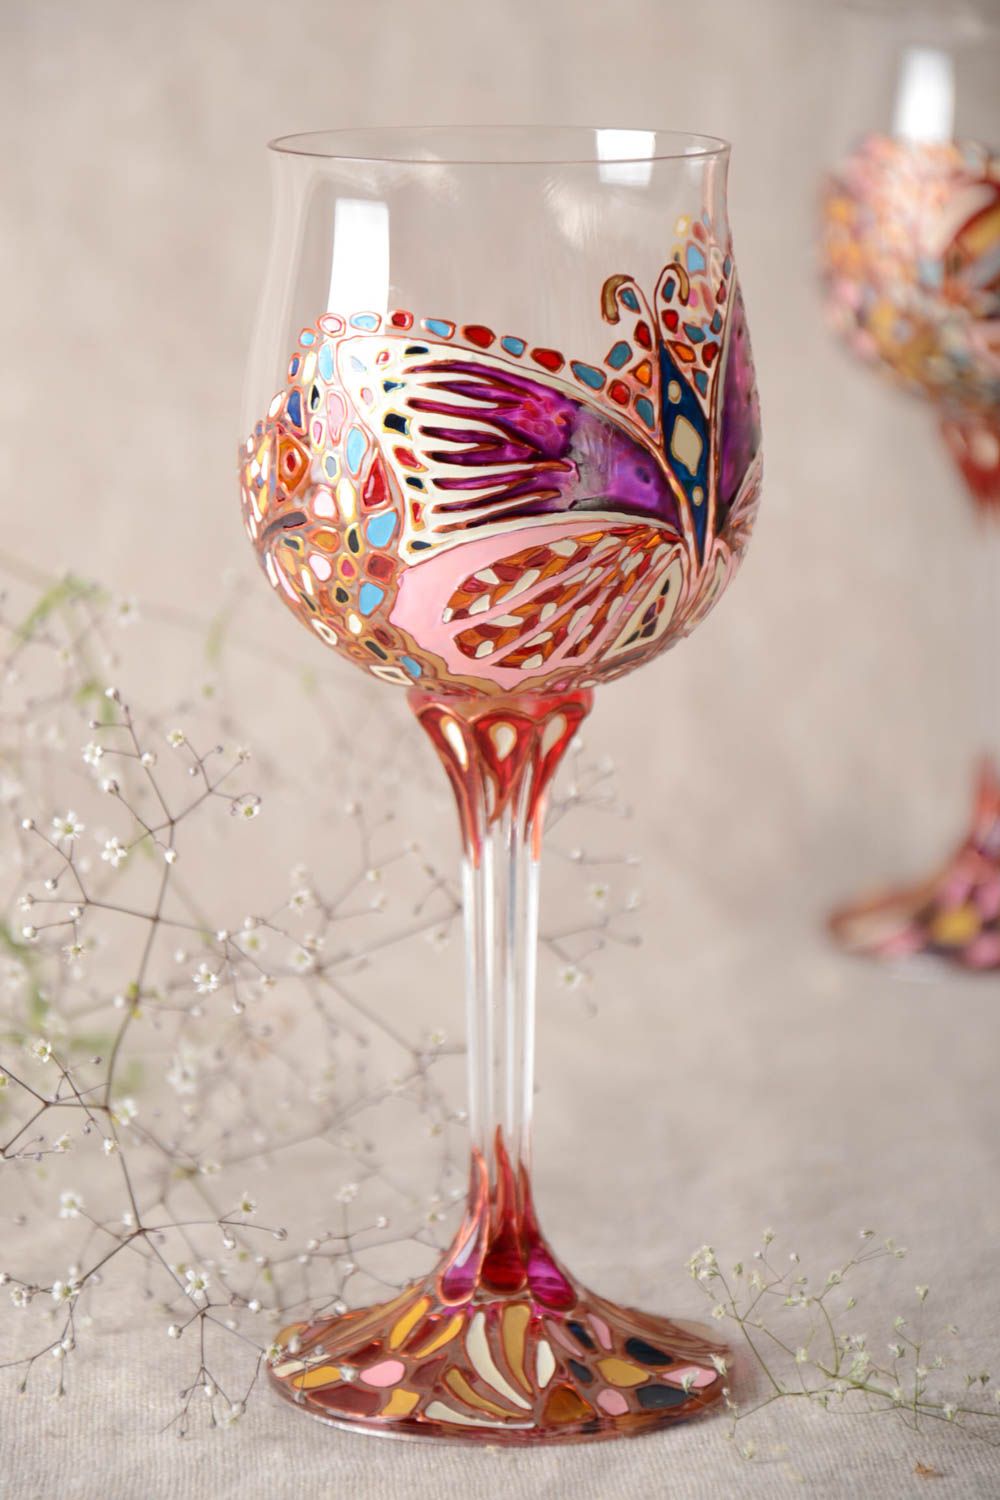 Handmade wine glass colored wine glasses 300 ml cool wine glasses birthday  gift